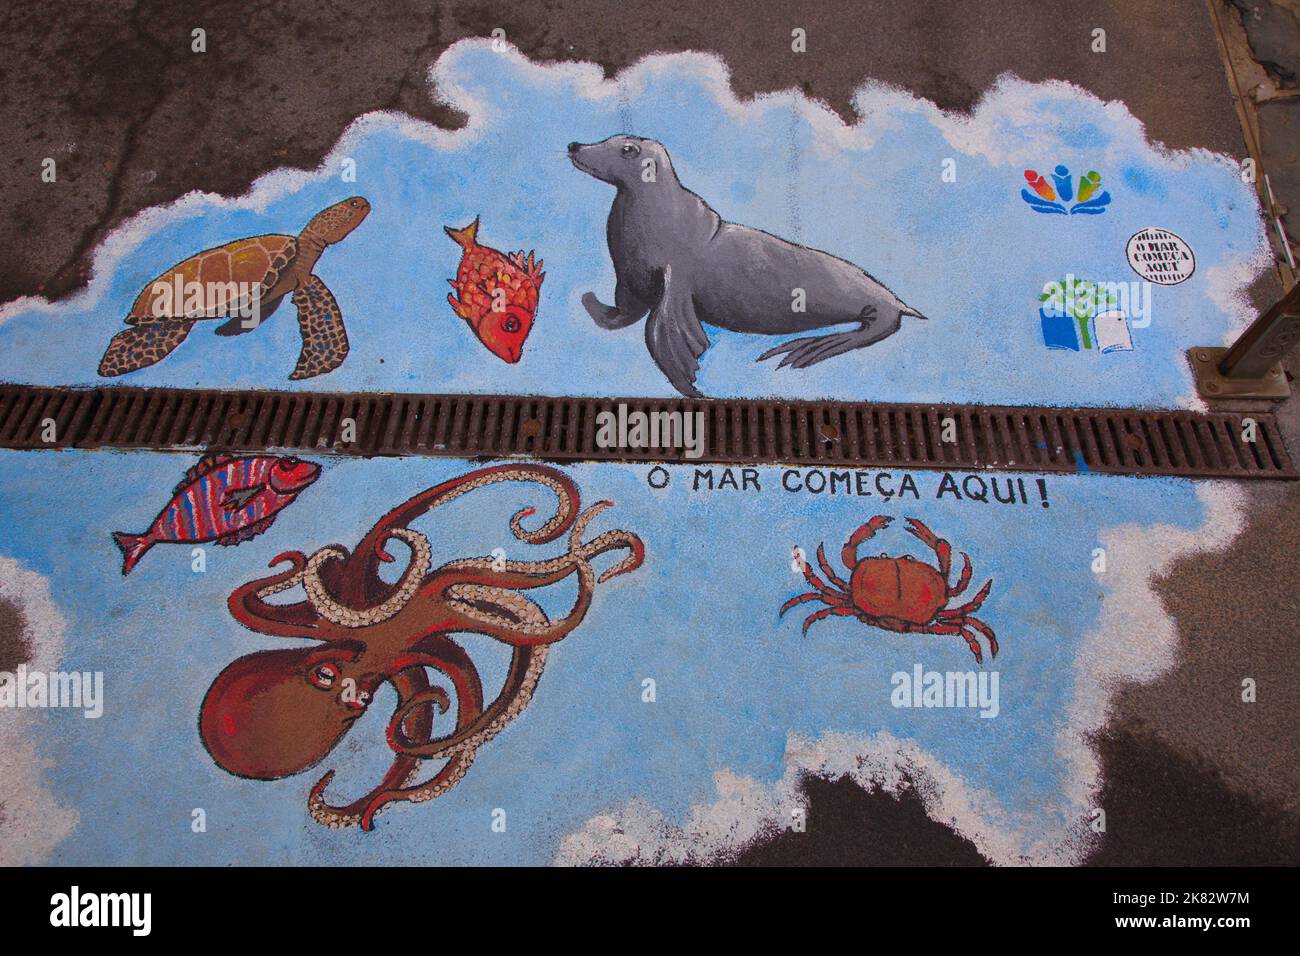 Portugal, Madeira, Camara de Lobos, fishing village, graffiti on sidewalk, the sea begins here, Stock Photo